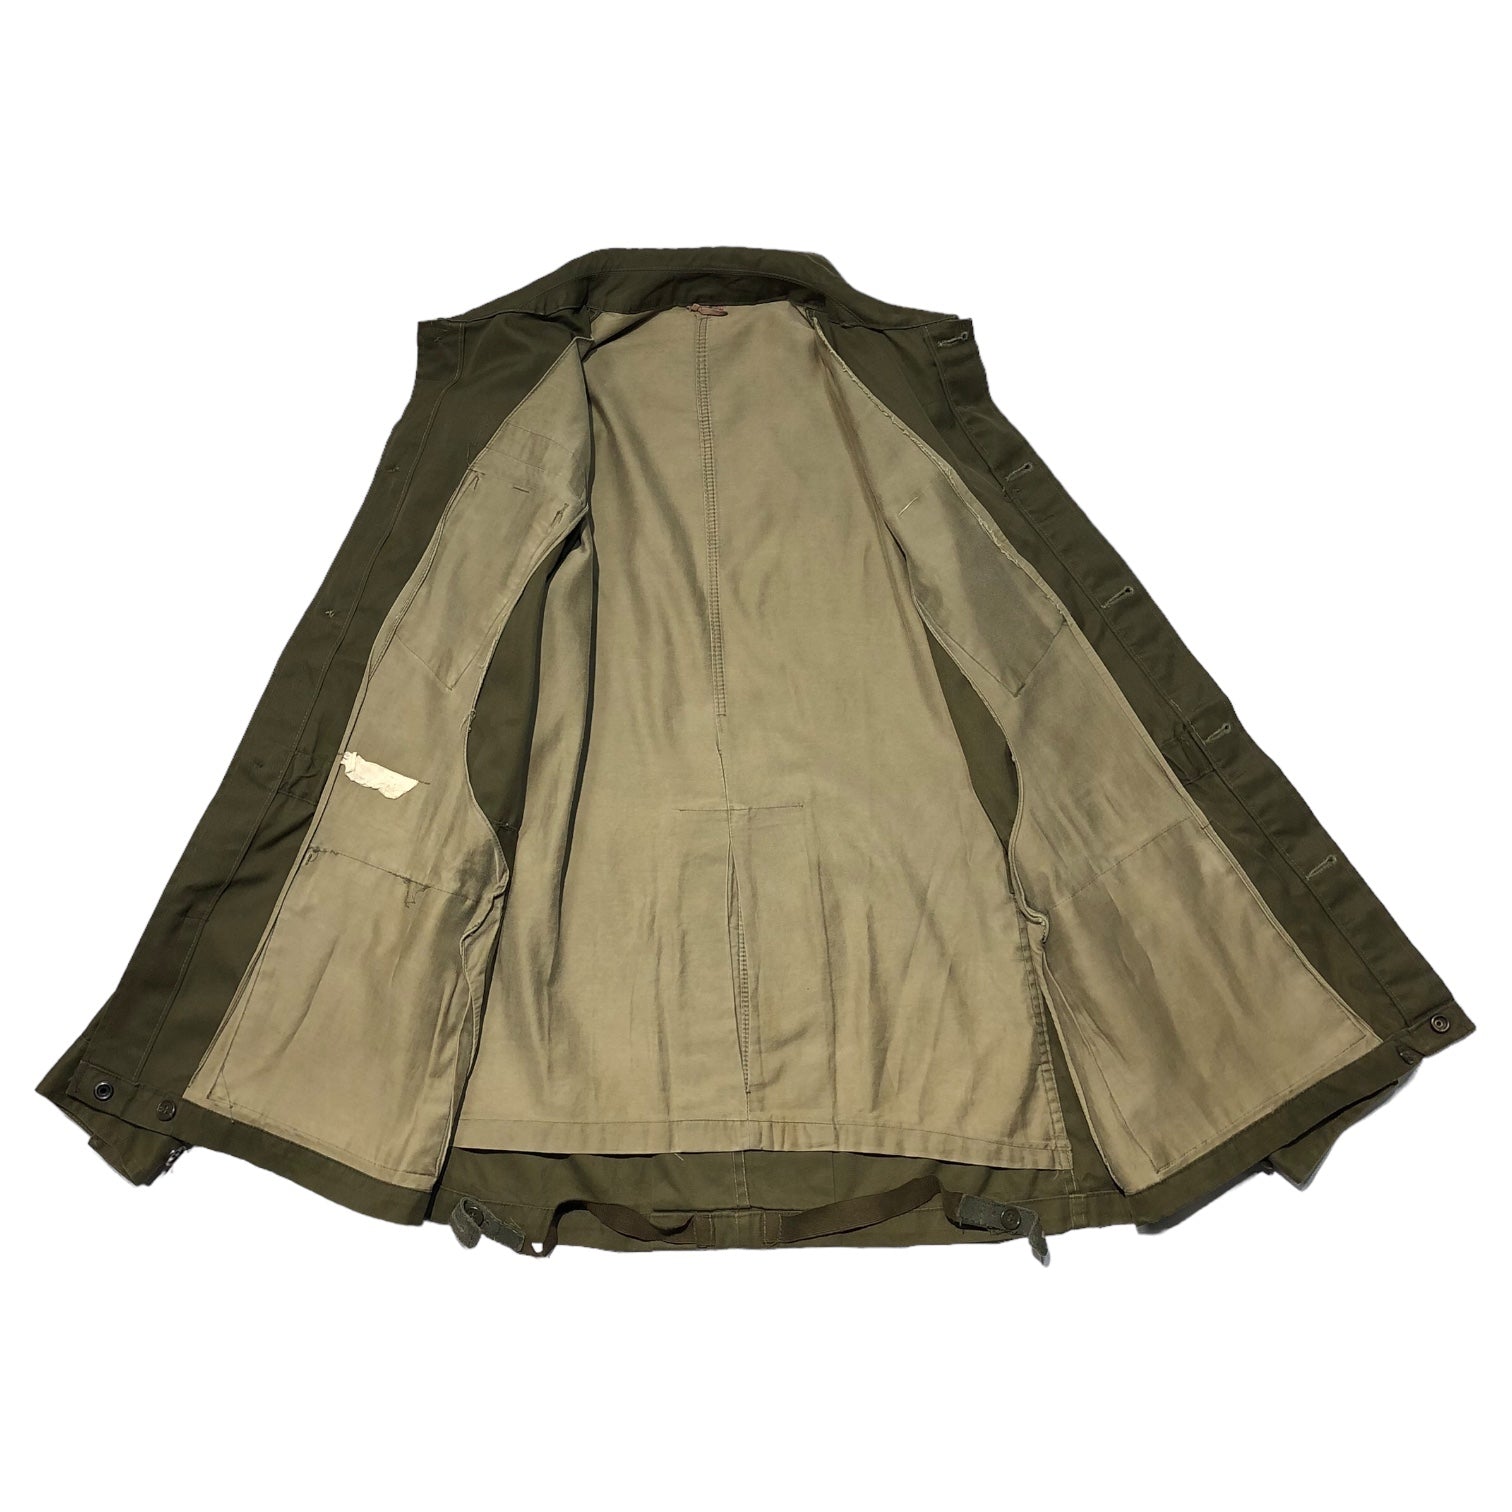 VINTAGE(ヴィンテージ) 70～80's italian military combat jacket ヴィンテージ イタリア軍 コンバットジャケット SIZE 50(L) セージグリーン